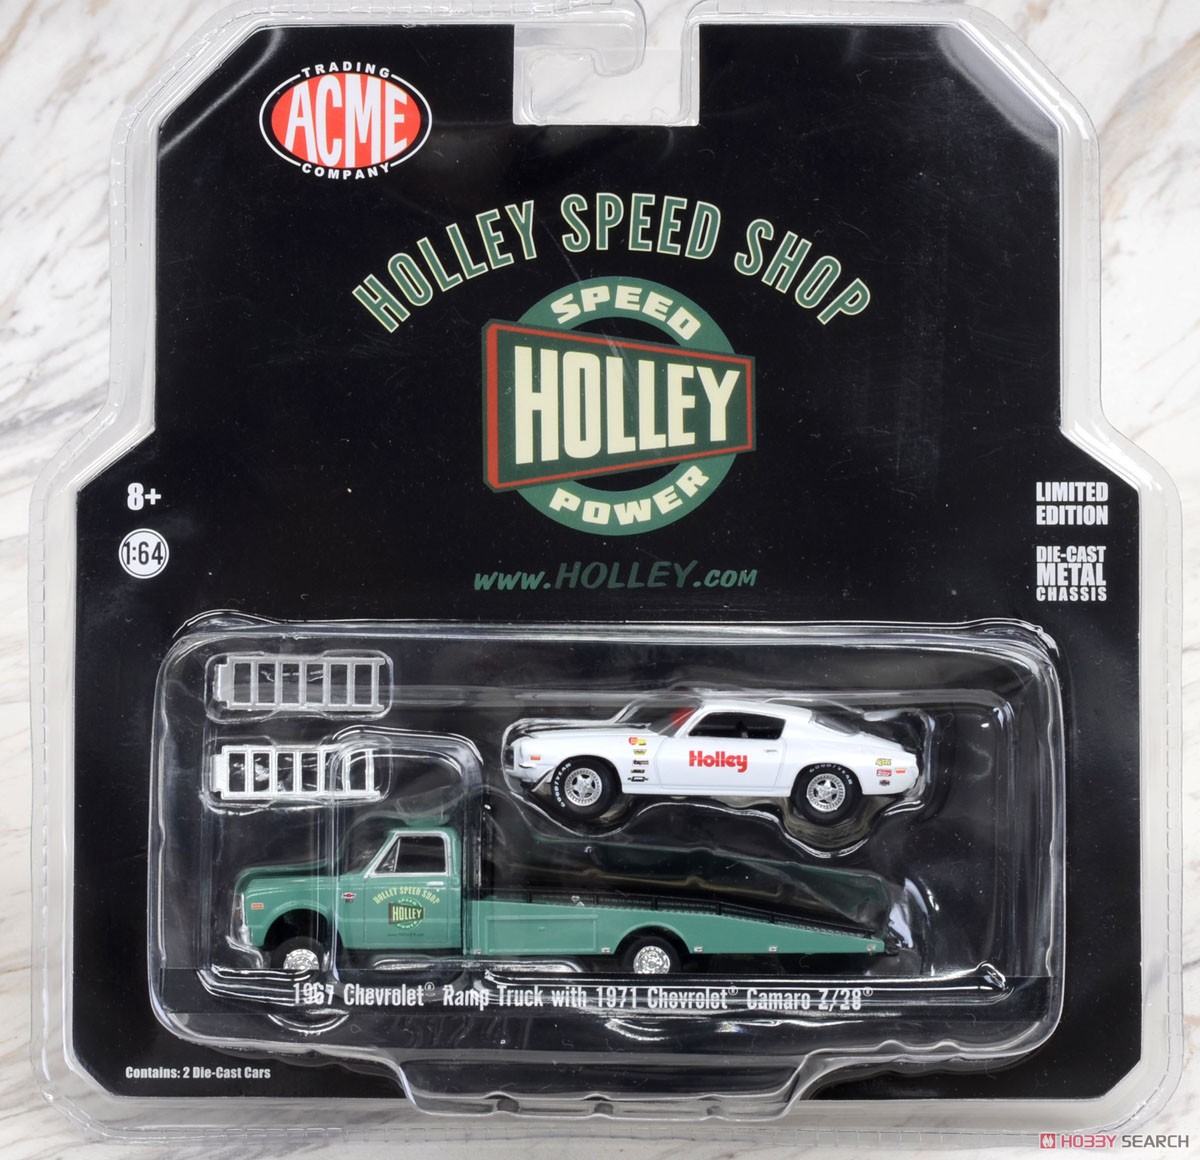 Holley Performance - 1967 Chevrolet Ramp Truck with 1971 Chevrolet Camaro (ミニカー) パッケージ1